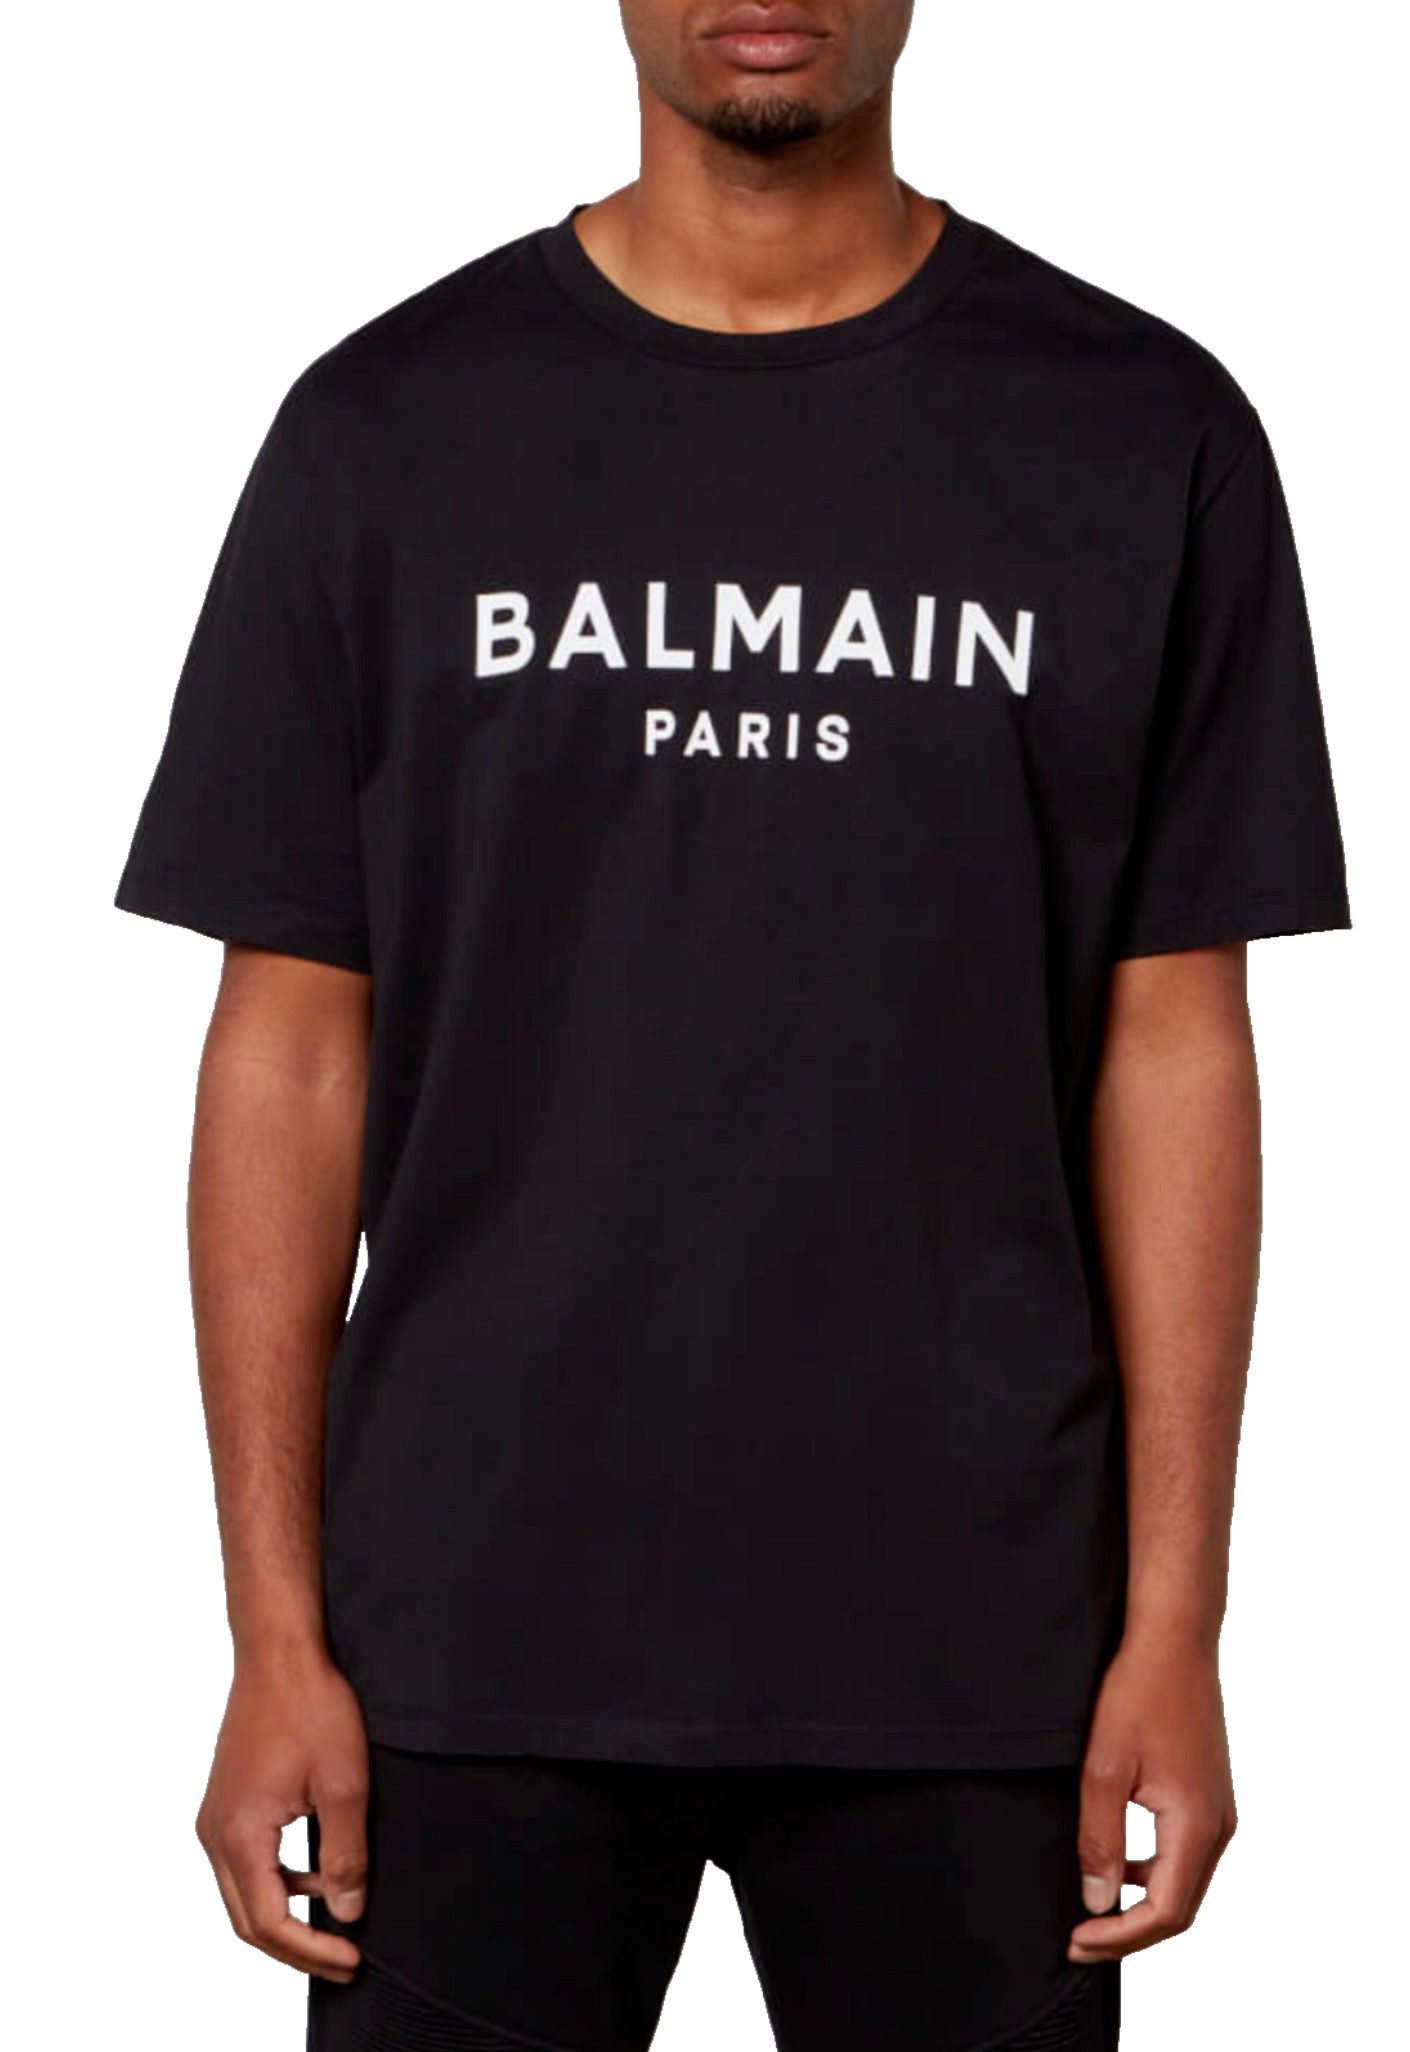 Balmain Paris T-Shirt Flocked Logo Straight Fit T-Shirt Cotton Shirt Paris Logo Tee Top